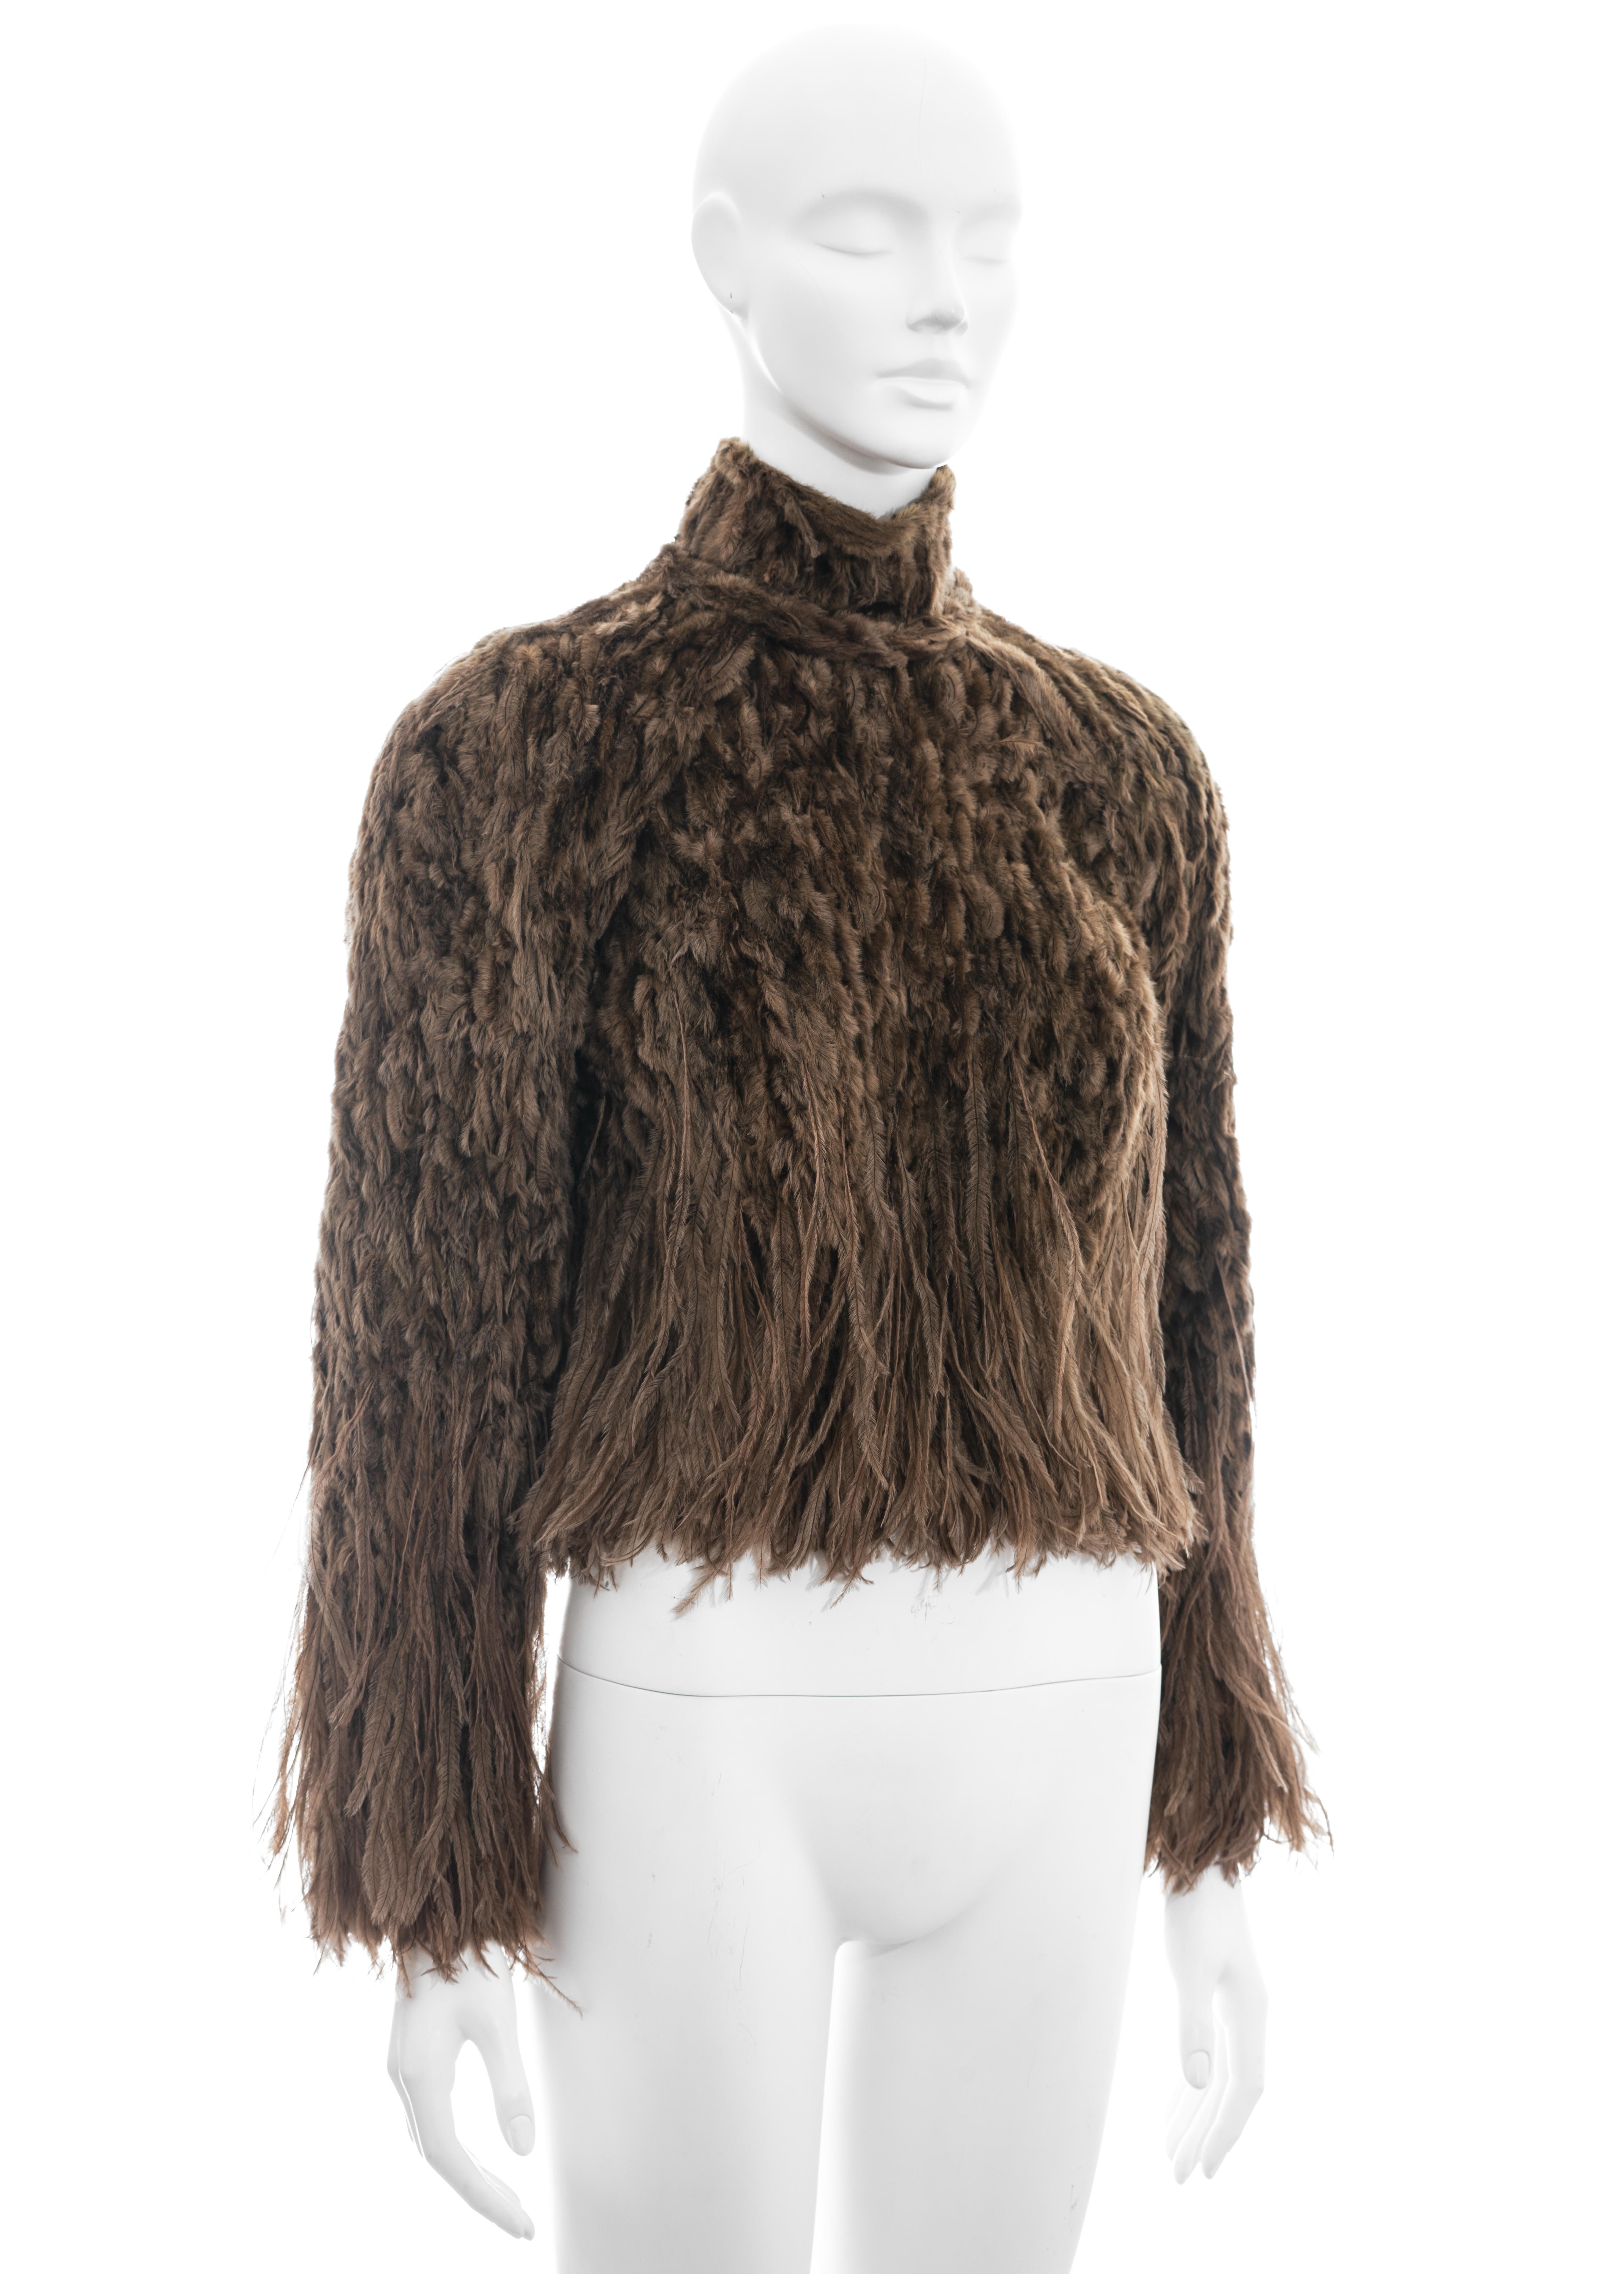 ▪ Jean Paul Gaultier Haute Couture woven fur top
▪ Ostrich feathers
▪ Rabbit fur
▪ Silk organza lining
▪ Metal zip back fastening 
▪ High neck
▪ Approx. FR 38 - UK 10 - US 6
▪ Fall-Winter 1999
